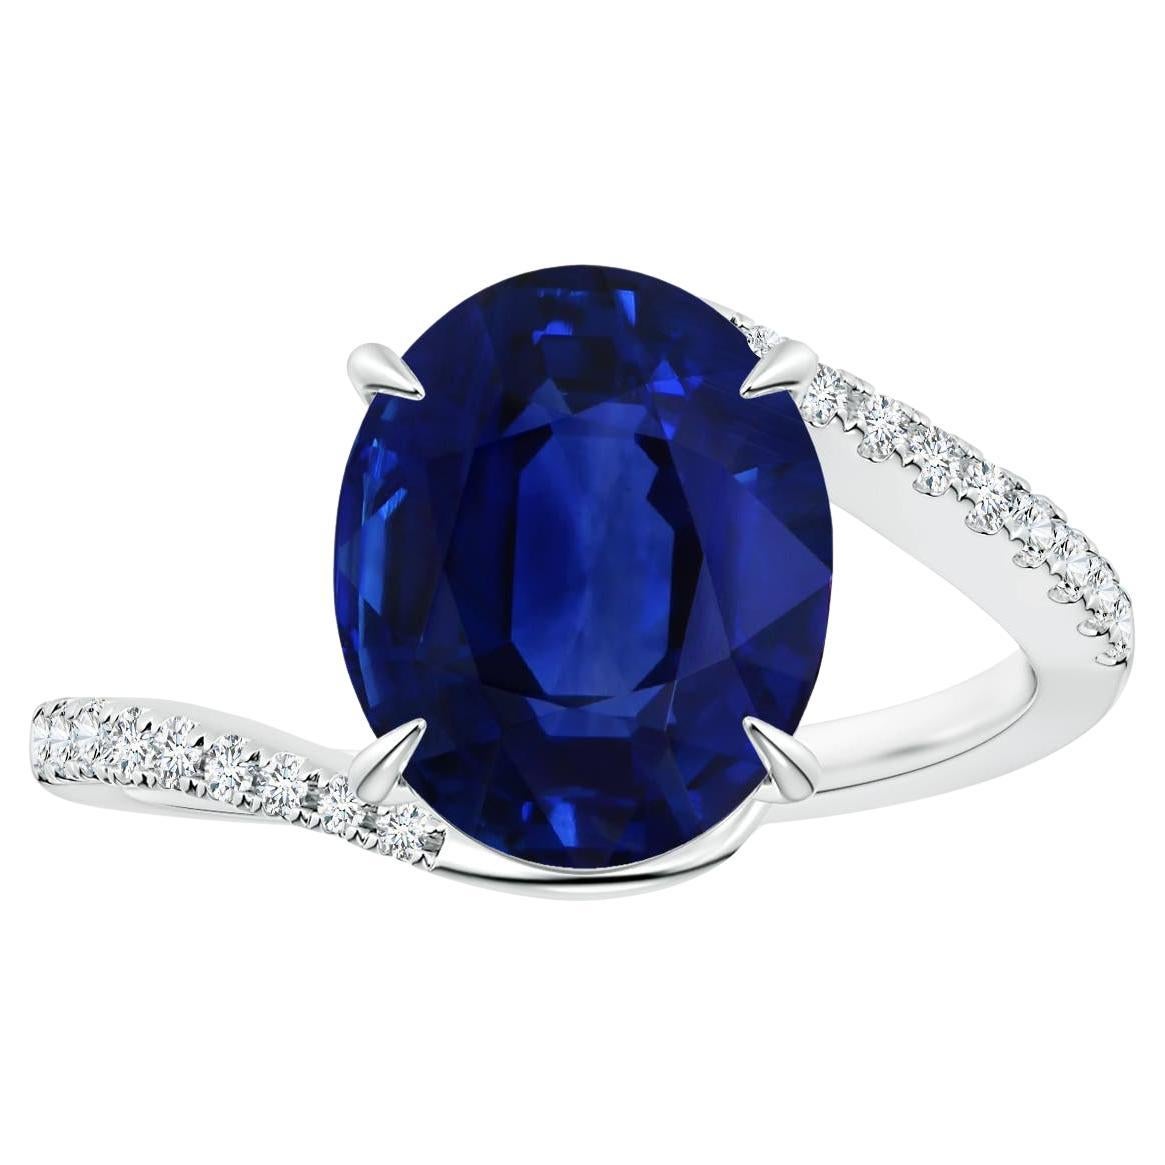 ANGARA Prinzessin Diana inspirierter GIA-zertifizierter Saphir-Halo-Ring aus Roségold